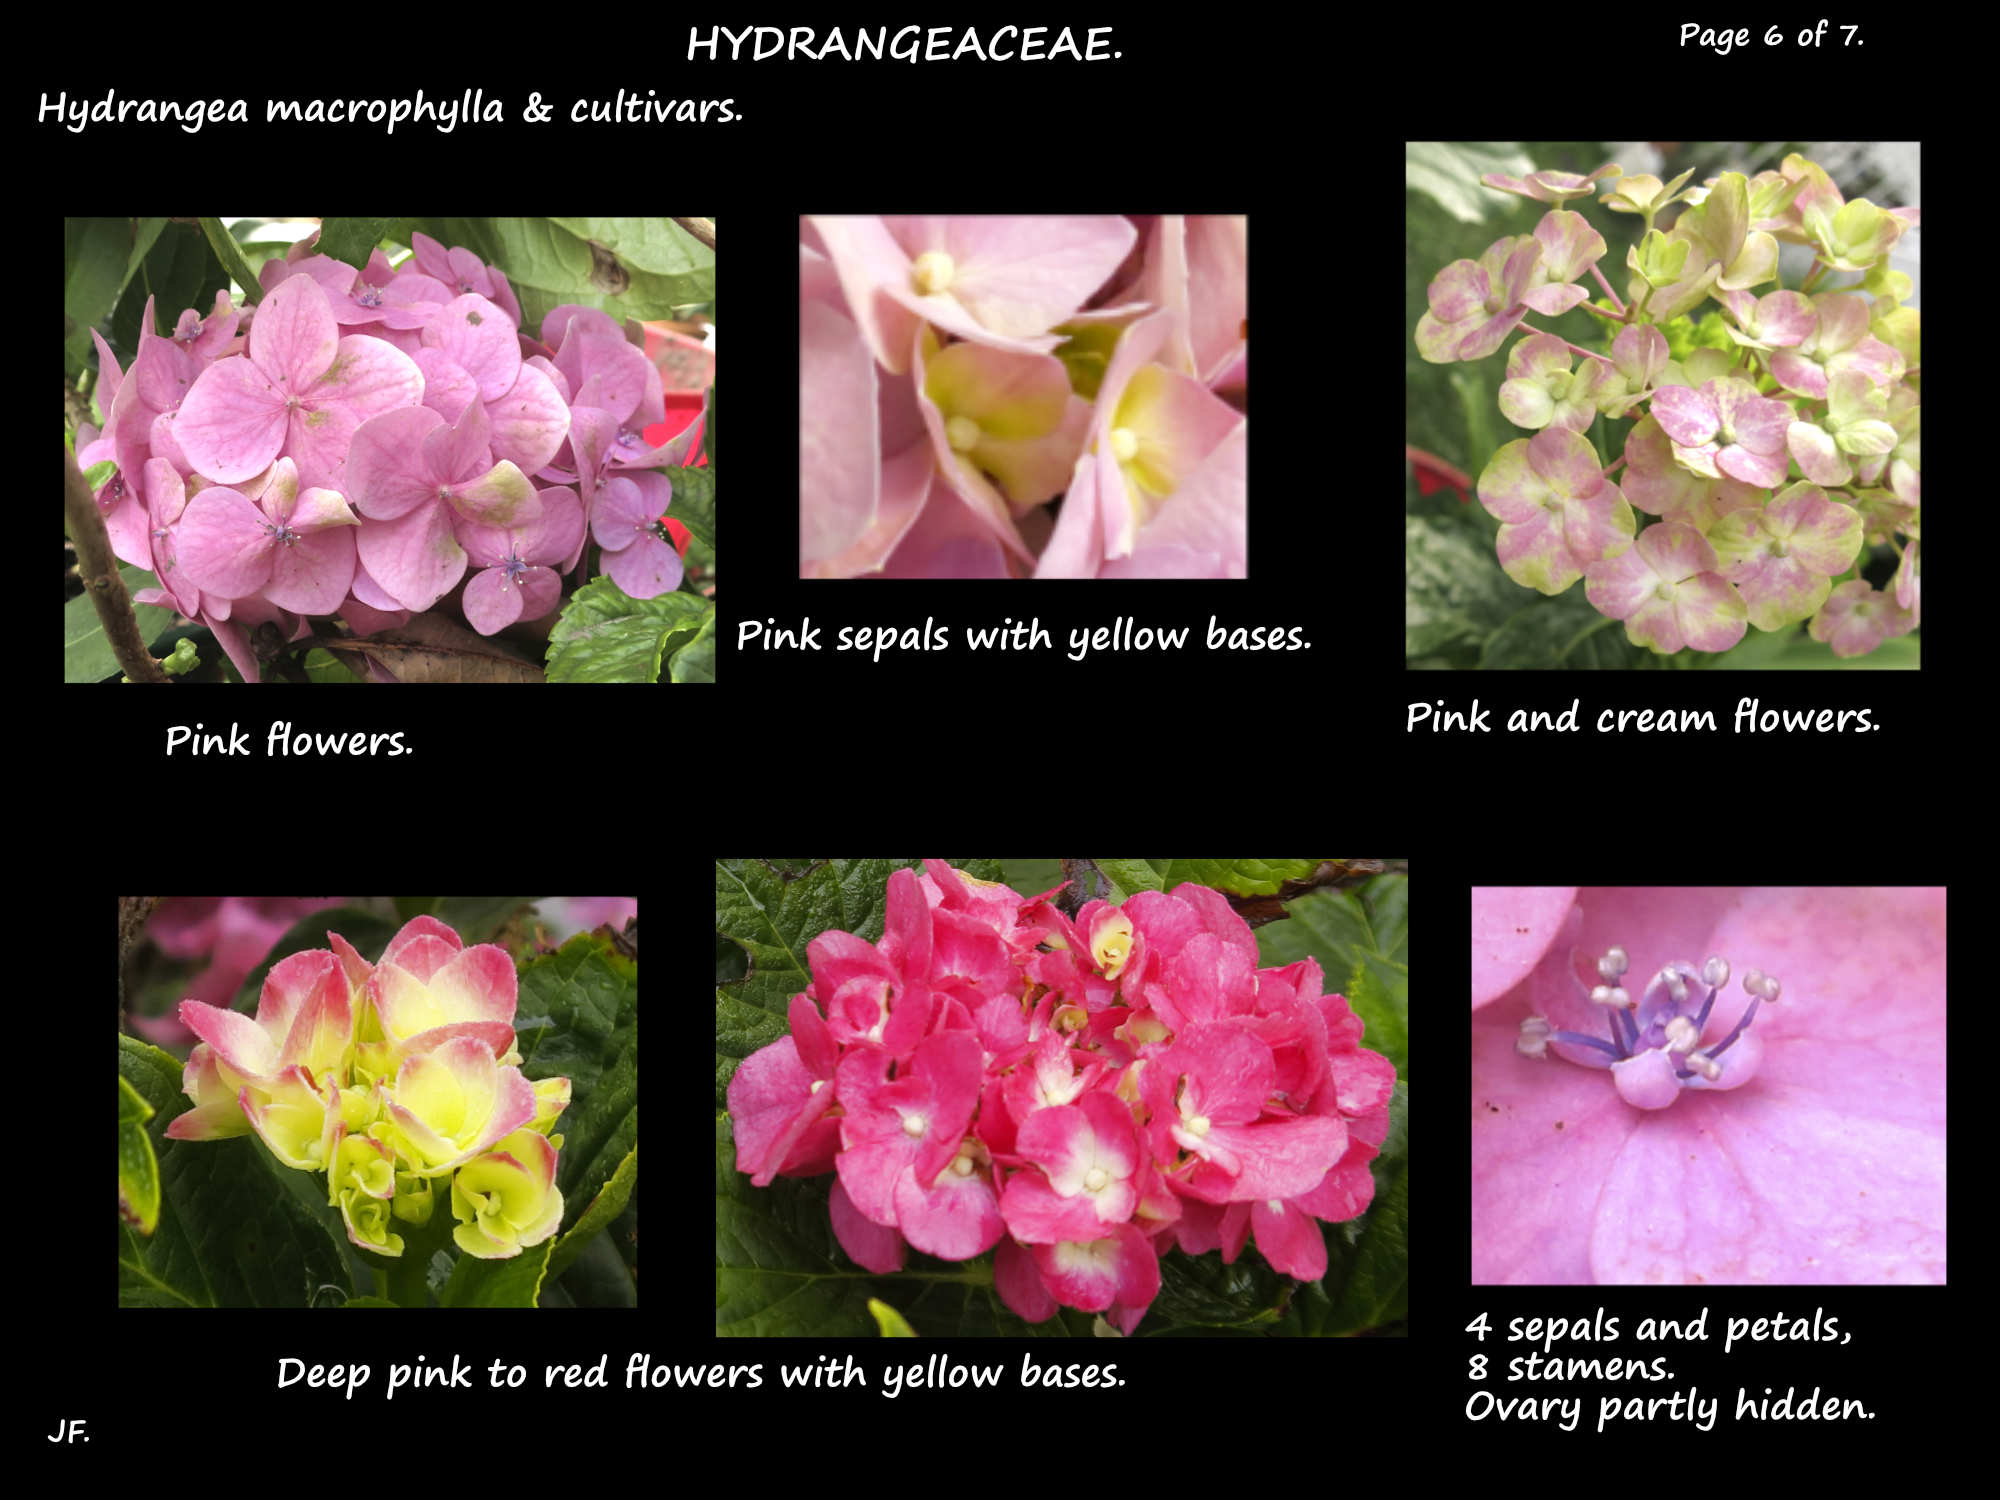 6 Red & pink Hydrangea macrophylla flowers